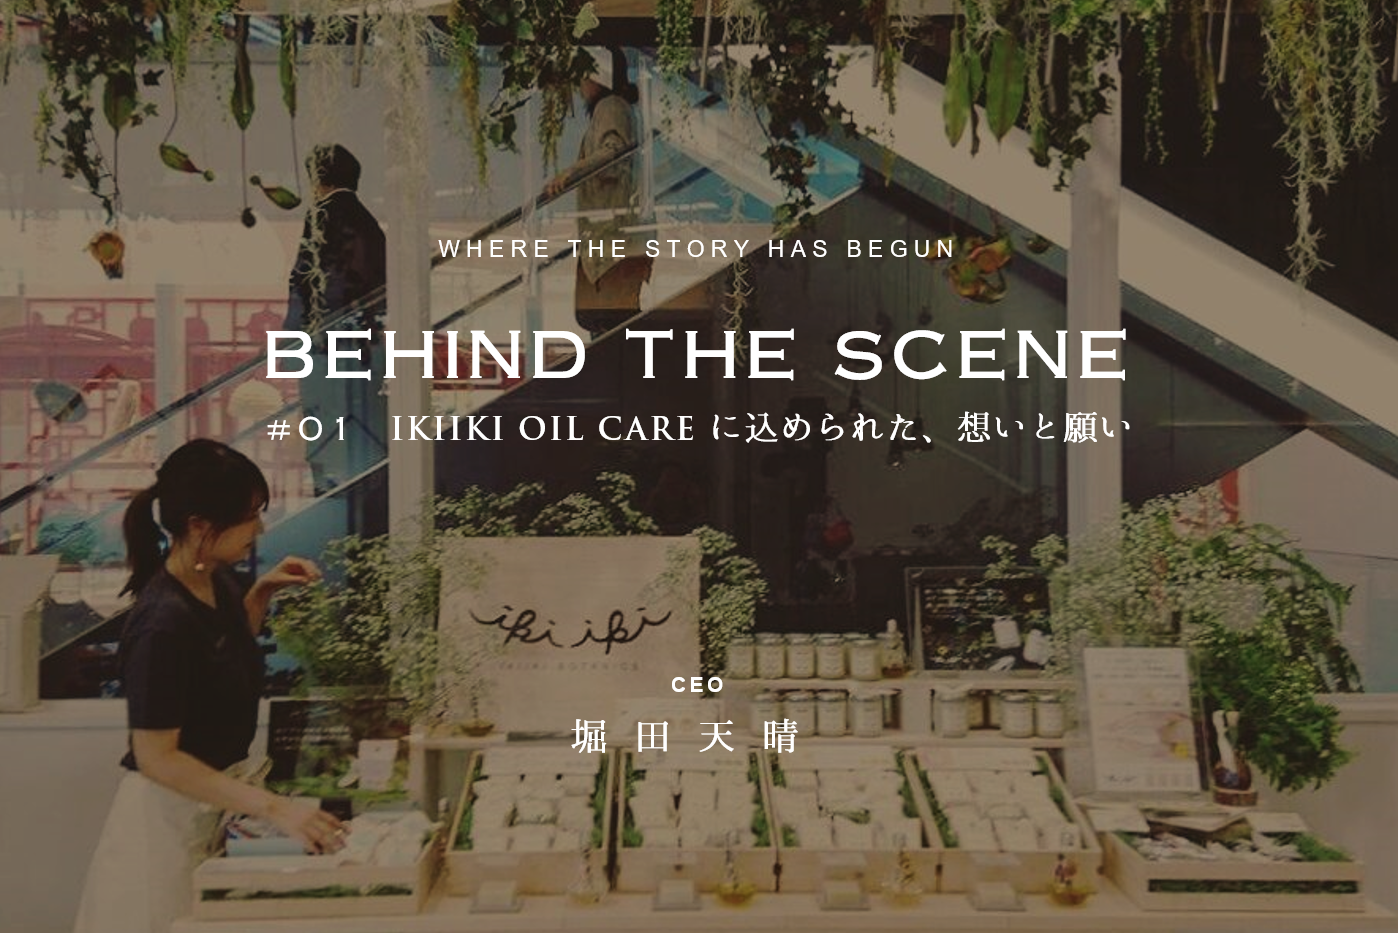 Behind the Scene #01 「IKIIKI OIL CAREに込められた、想いと願い」from TEN